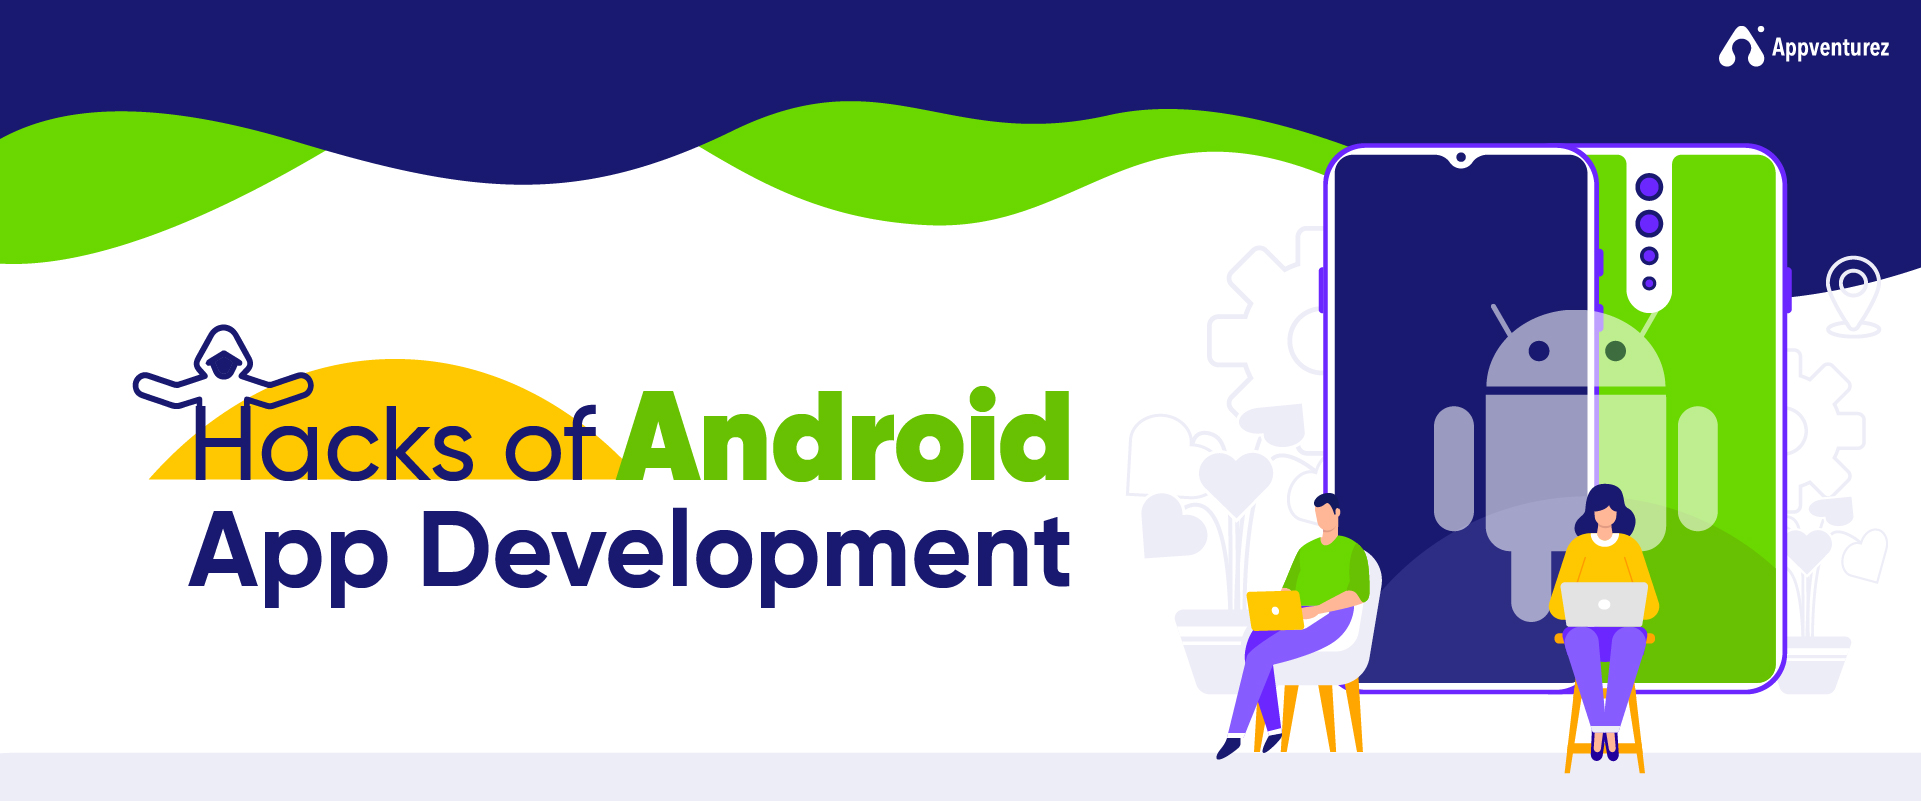 30+ Hacks of Android App Development - Appventurez